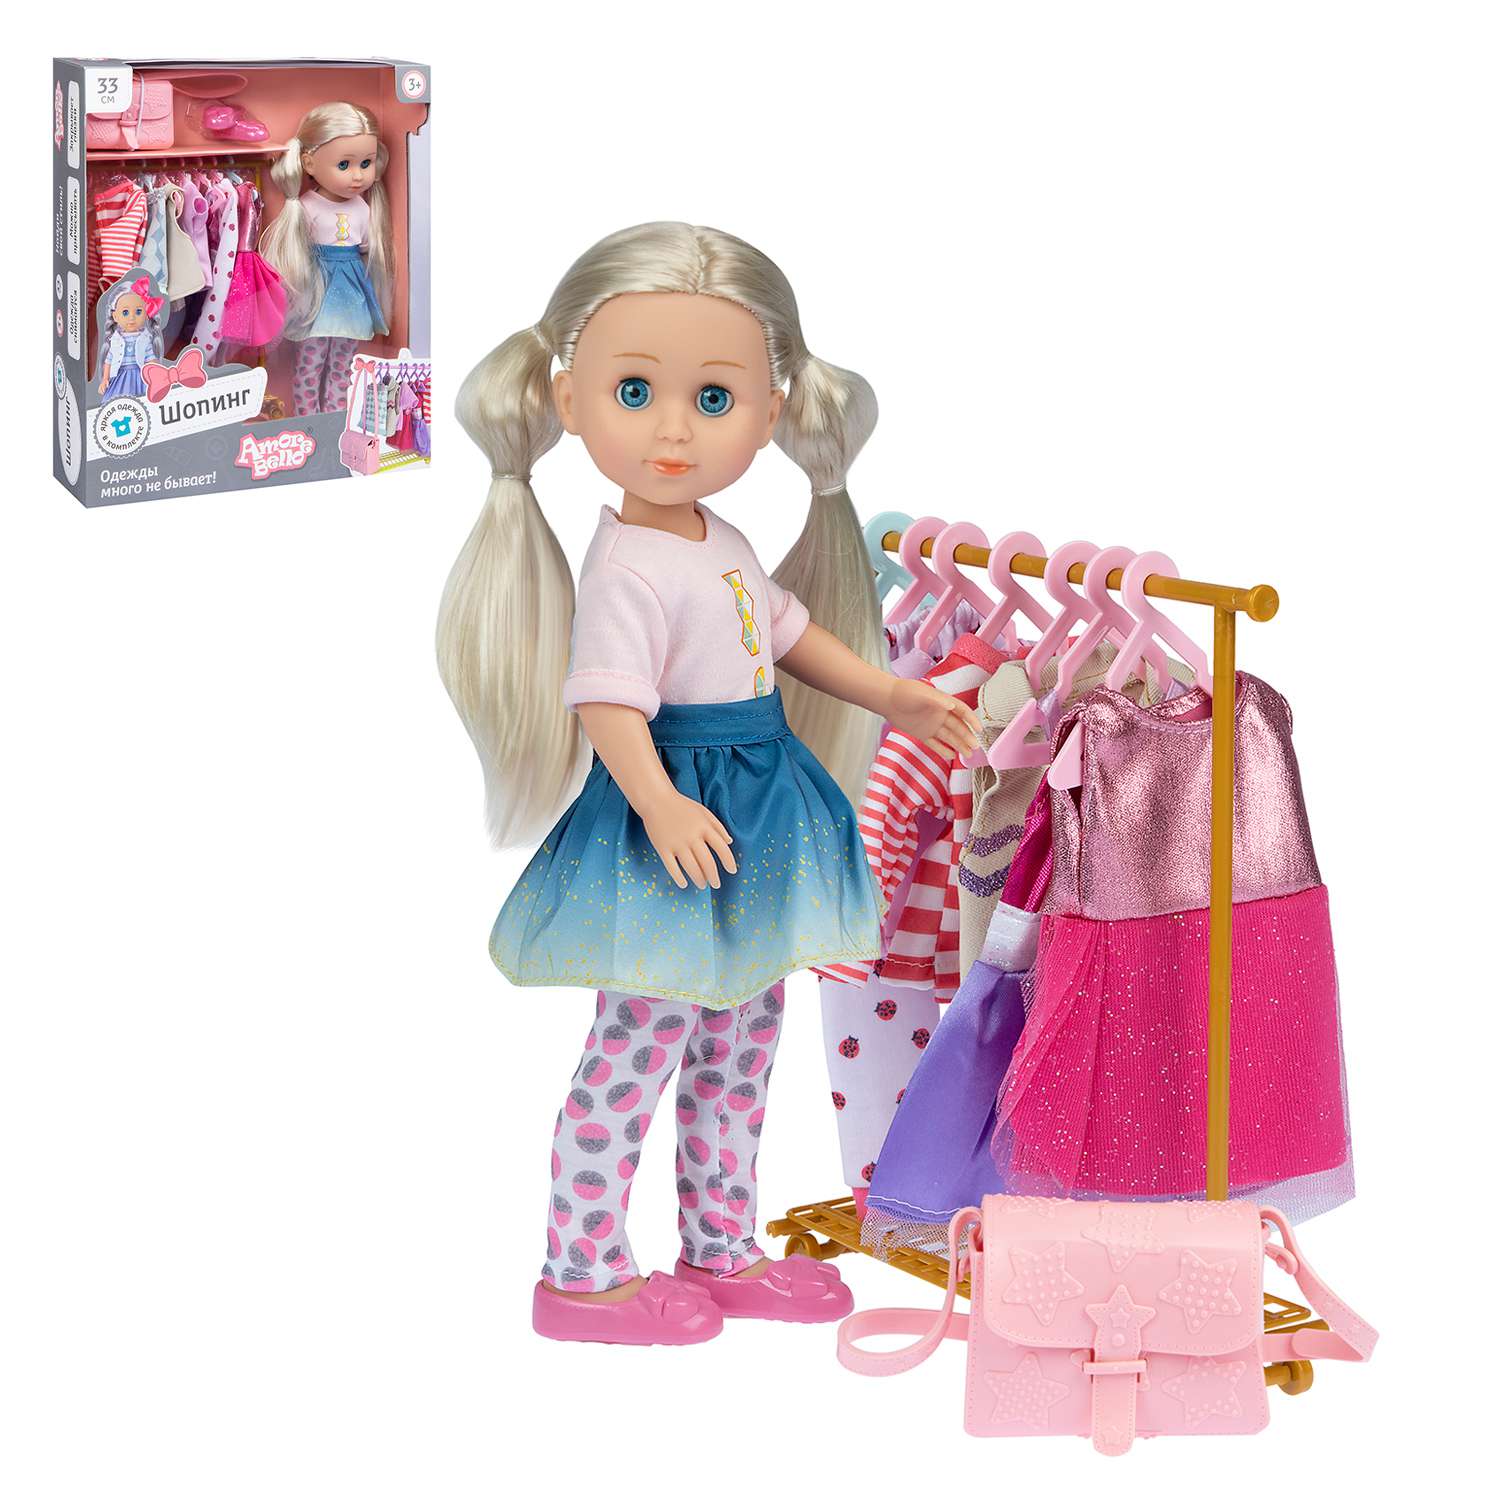 Кукла JB0211476 Шопинг с одеждой и аксессуарами ТМ Amore Bello - Волгоград 